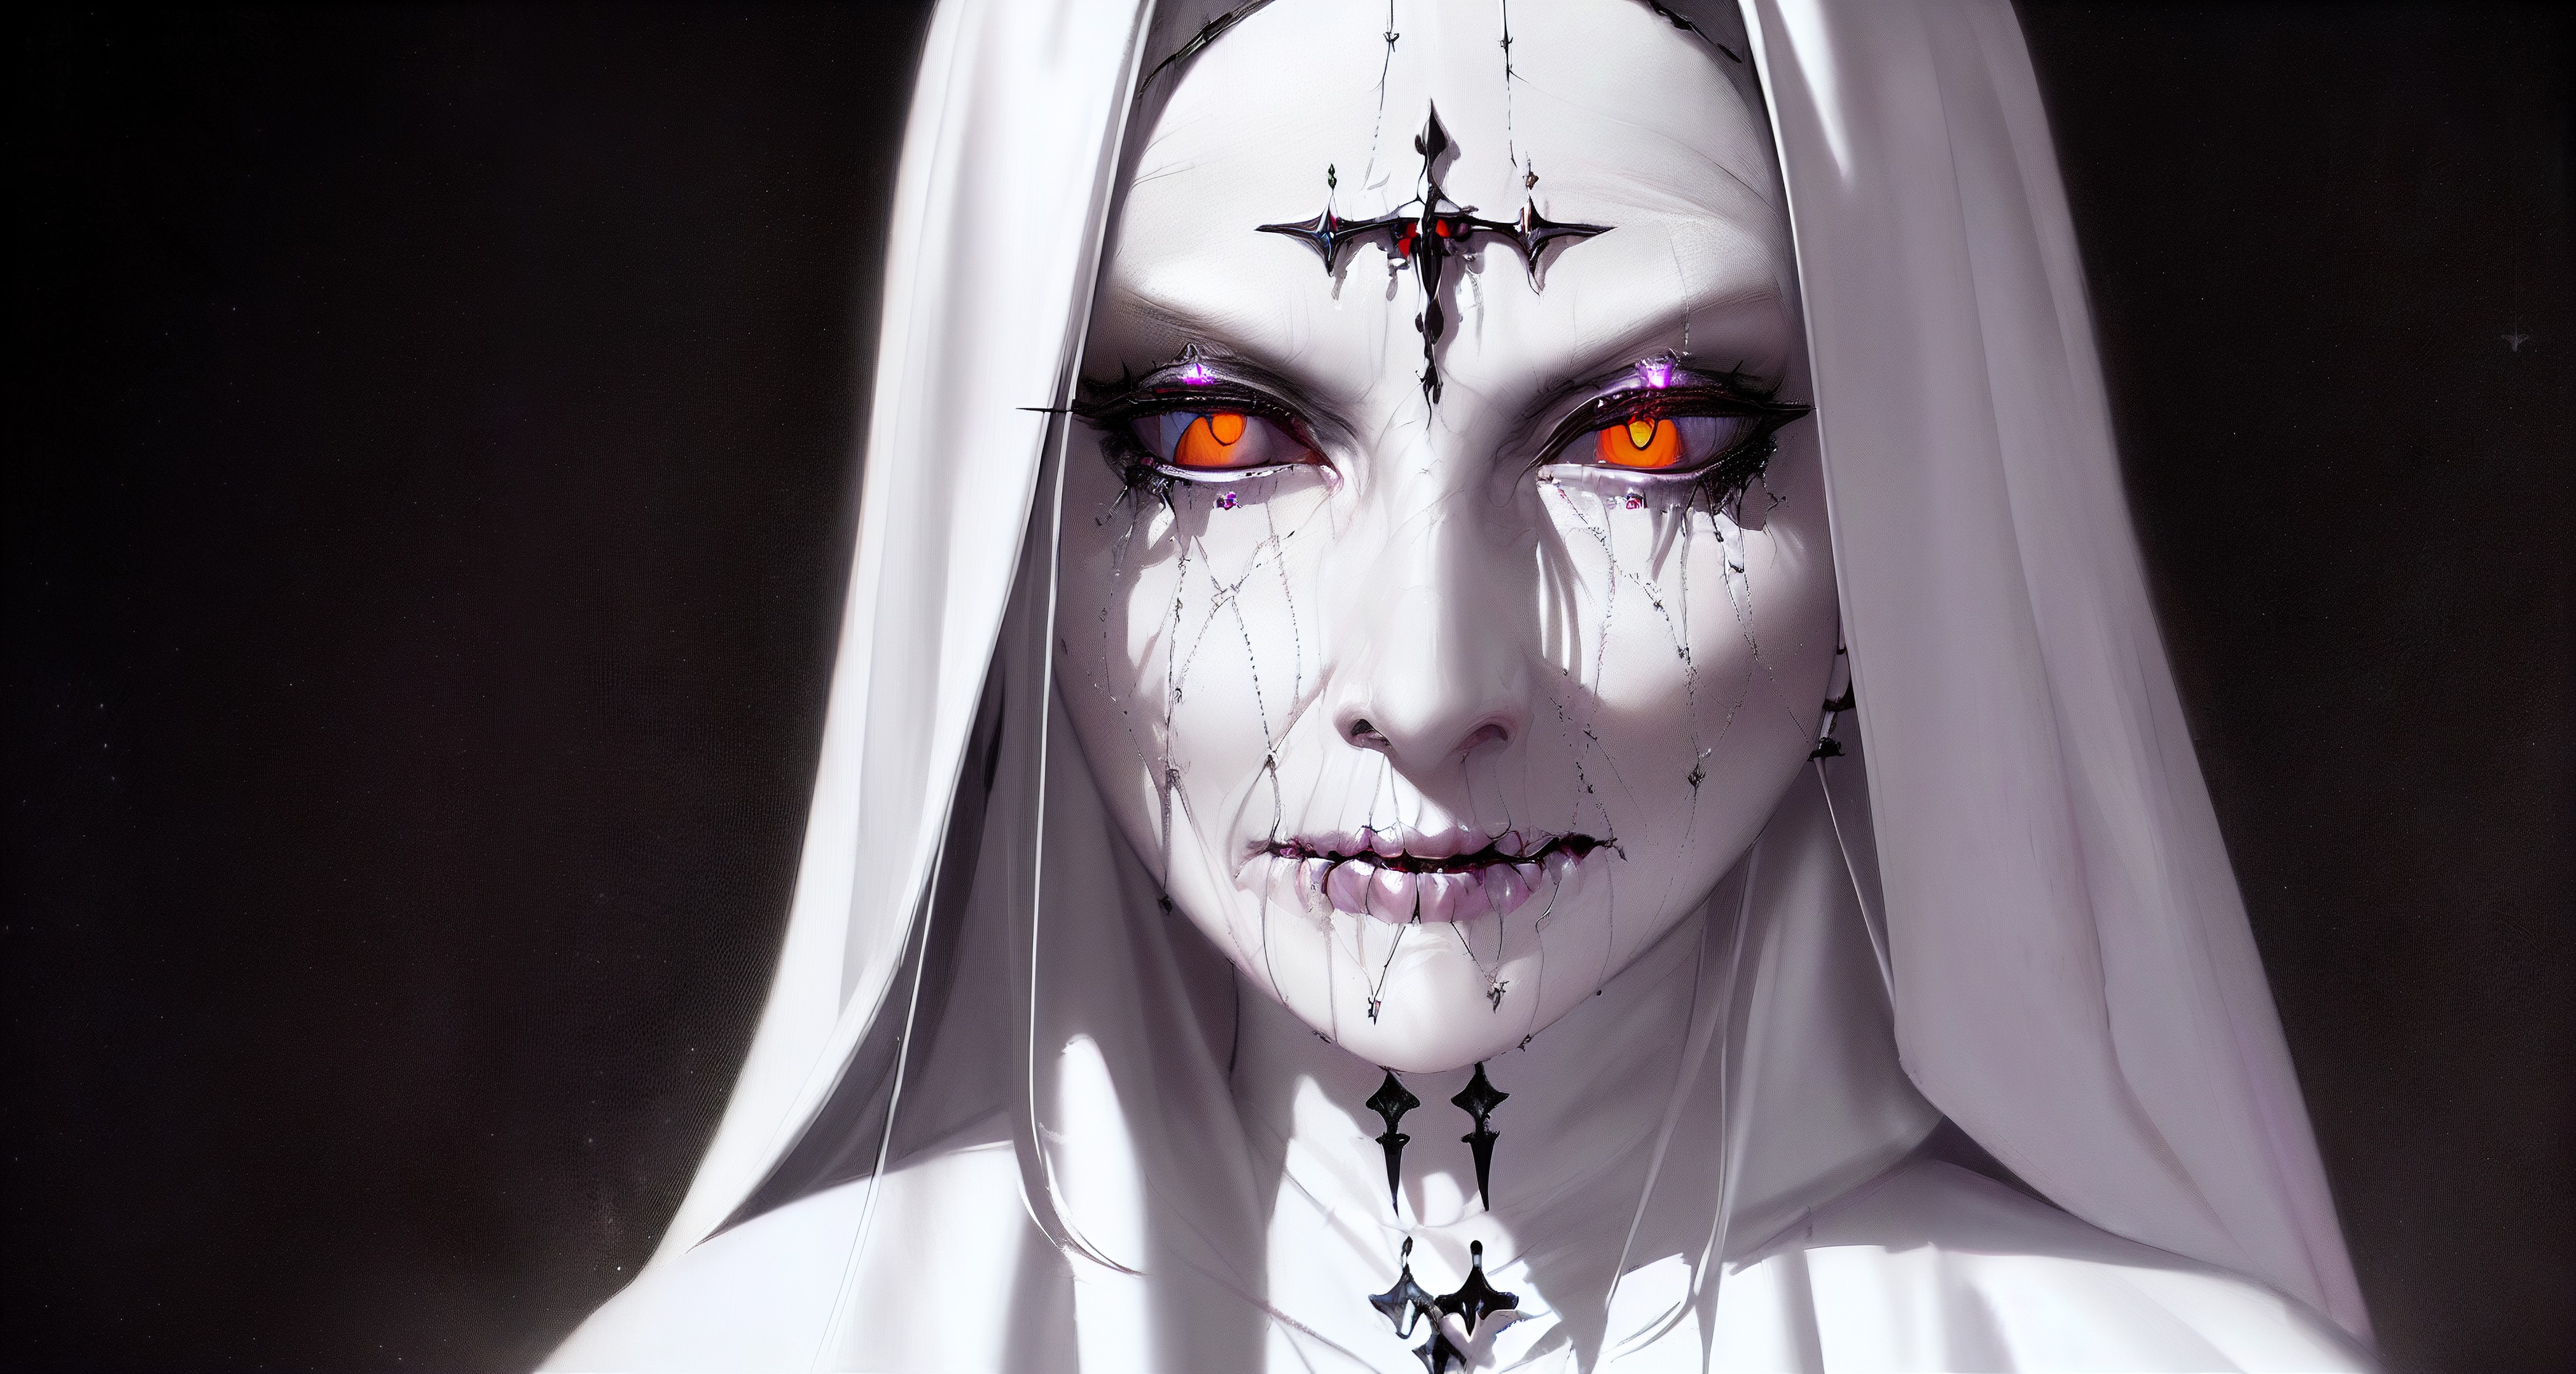 General 4050x2160 women nun's habit pale piercing orange eyes cross demon face black background white hair AI art Stable Diffusion